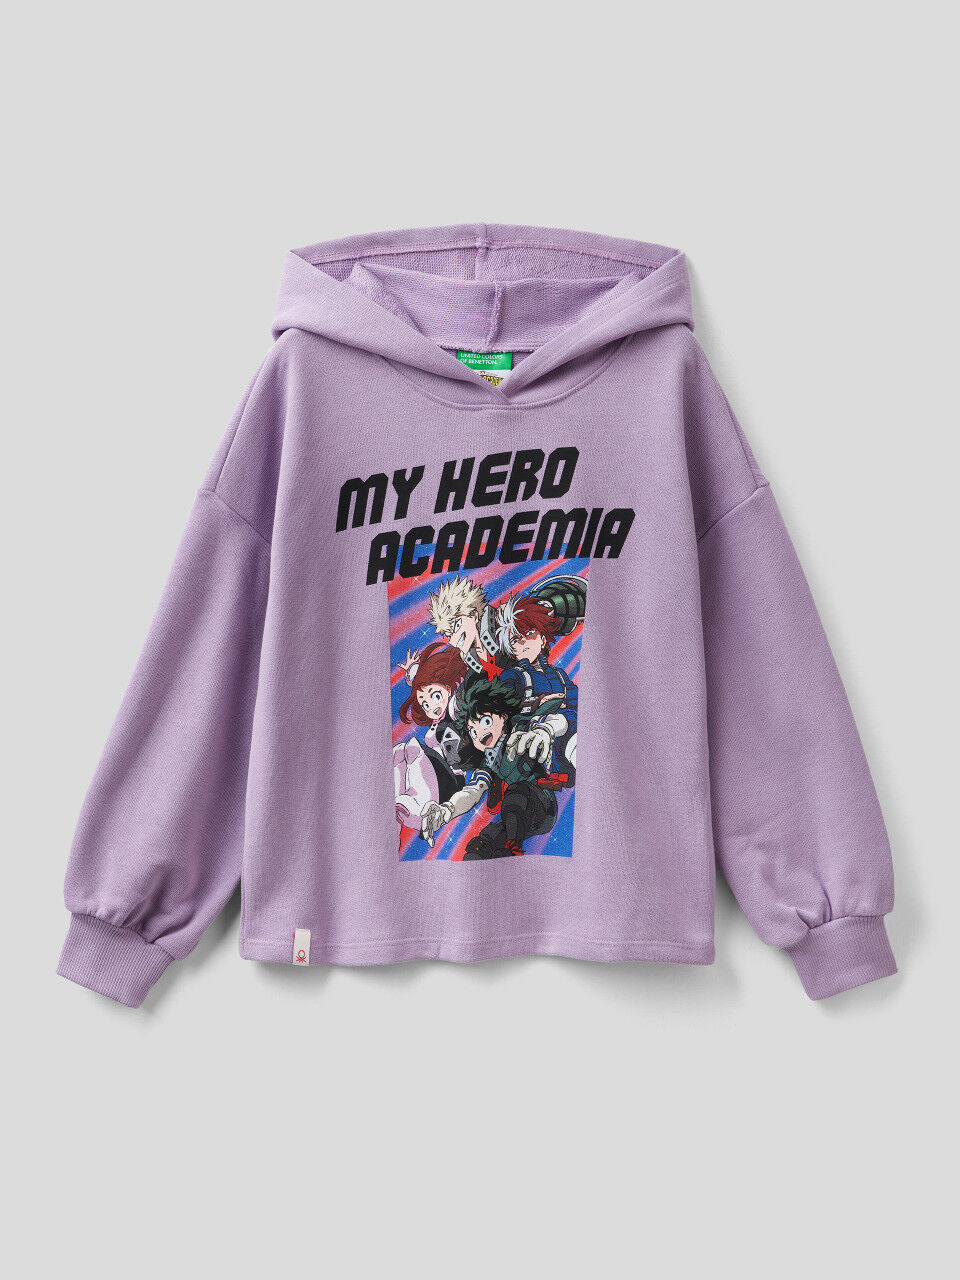 Warm "My Hero Academia" sweatshirt